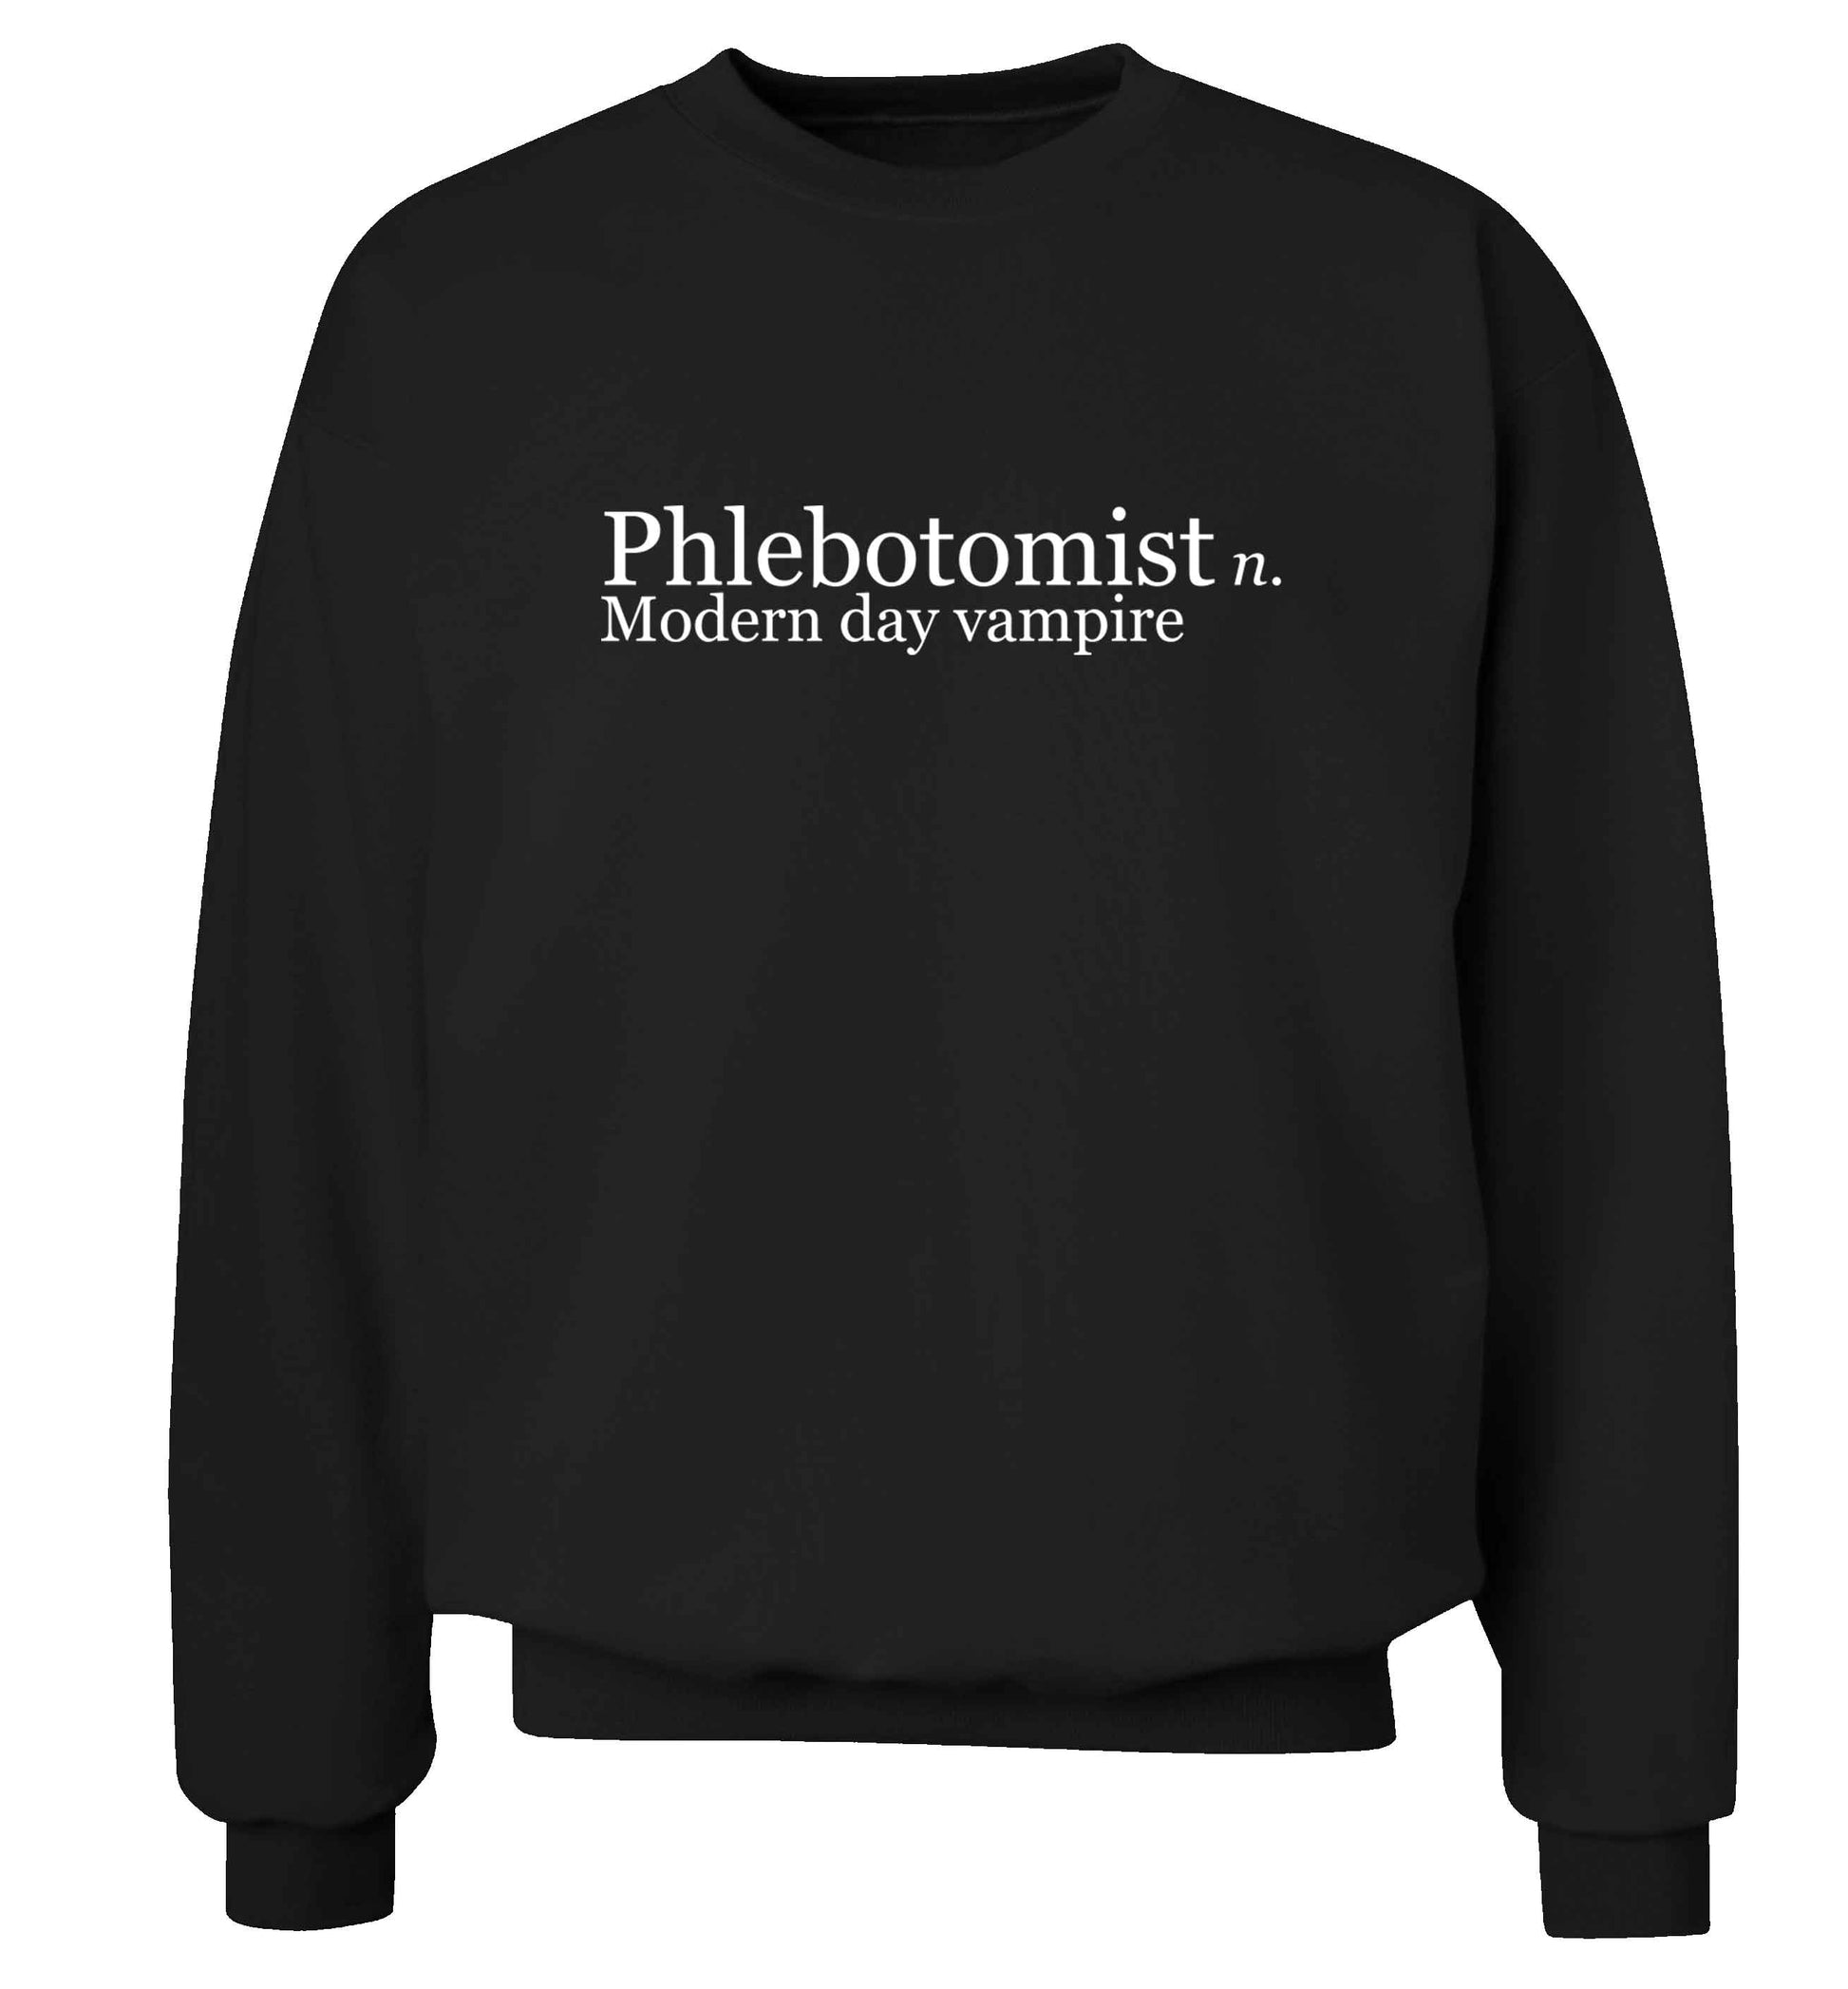 Phlebotomist - Modern day vampire adult's unisex black sweater 2XL